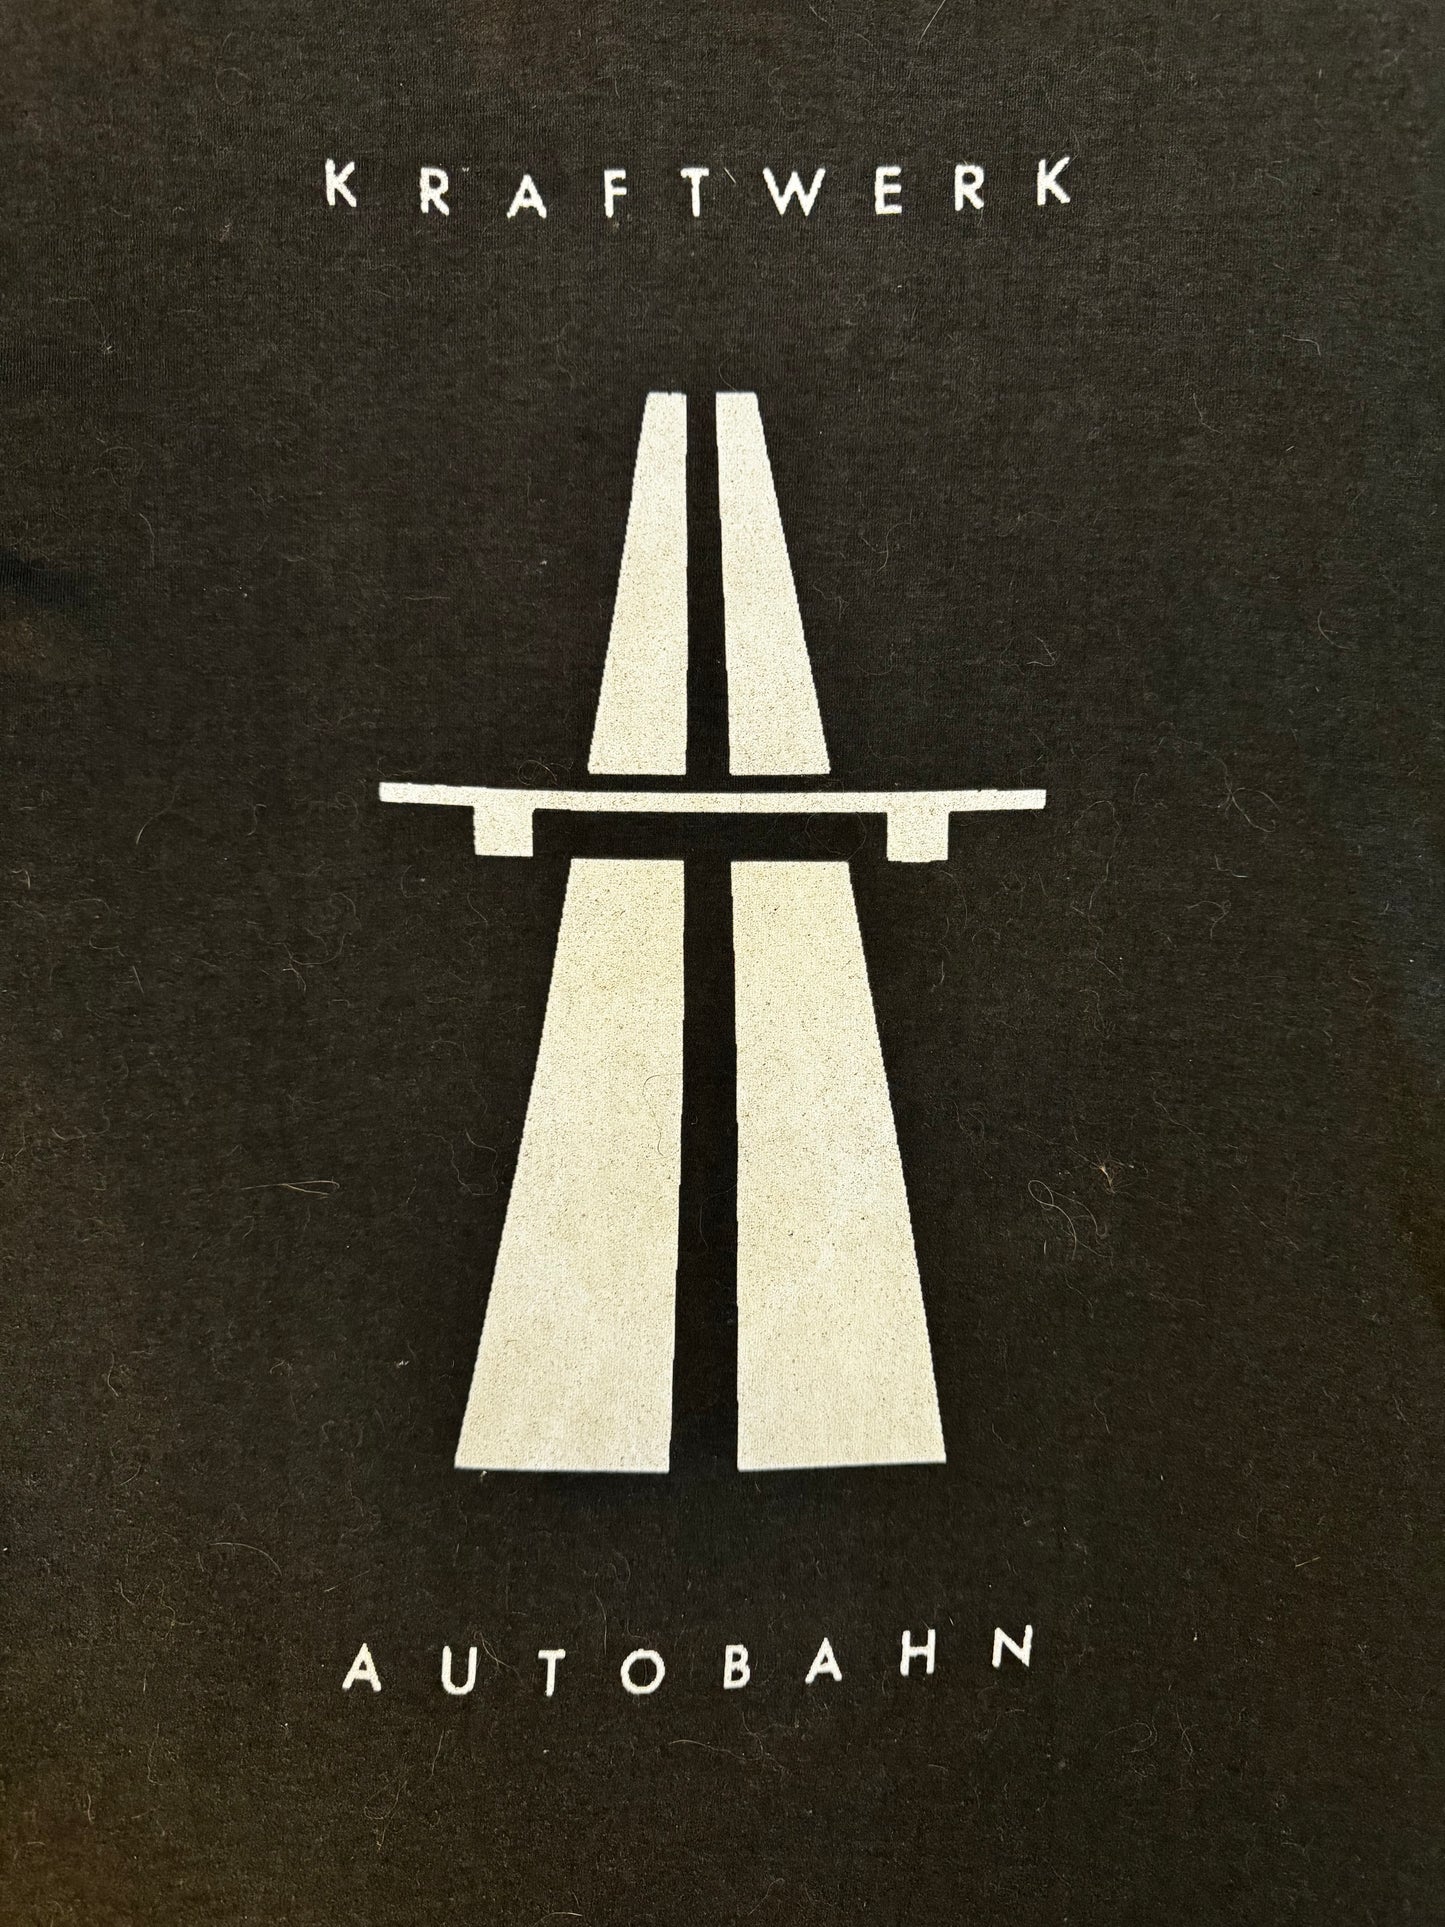 Kraftwerk Autobahn Vintage T Shirt